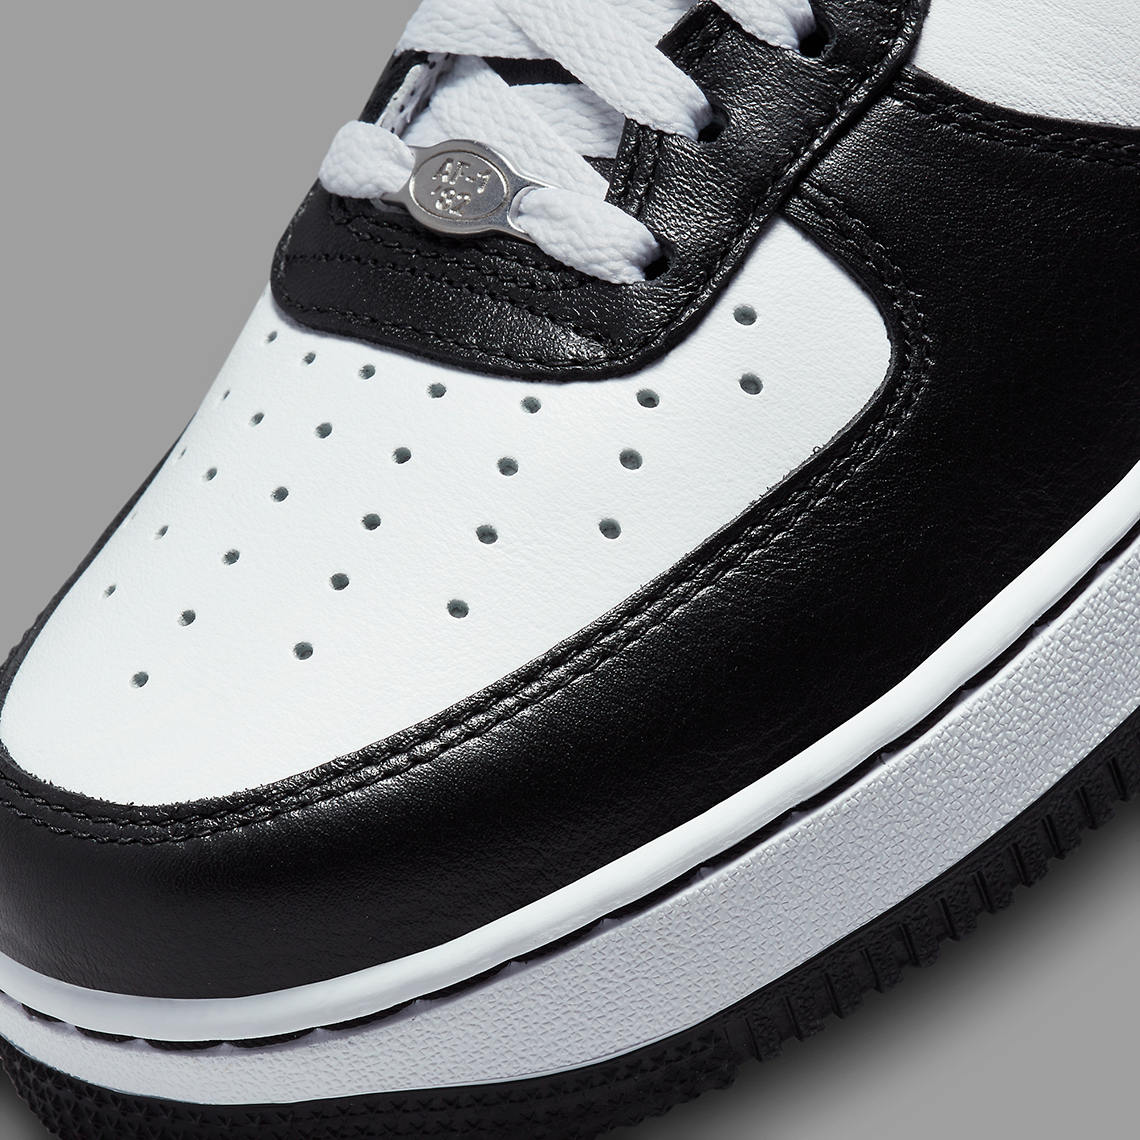 Nike air max impact 3 black wolf grey sneakers shoes dc3725-003 mens 10 Terror Squad Fj5756 100 7